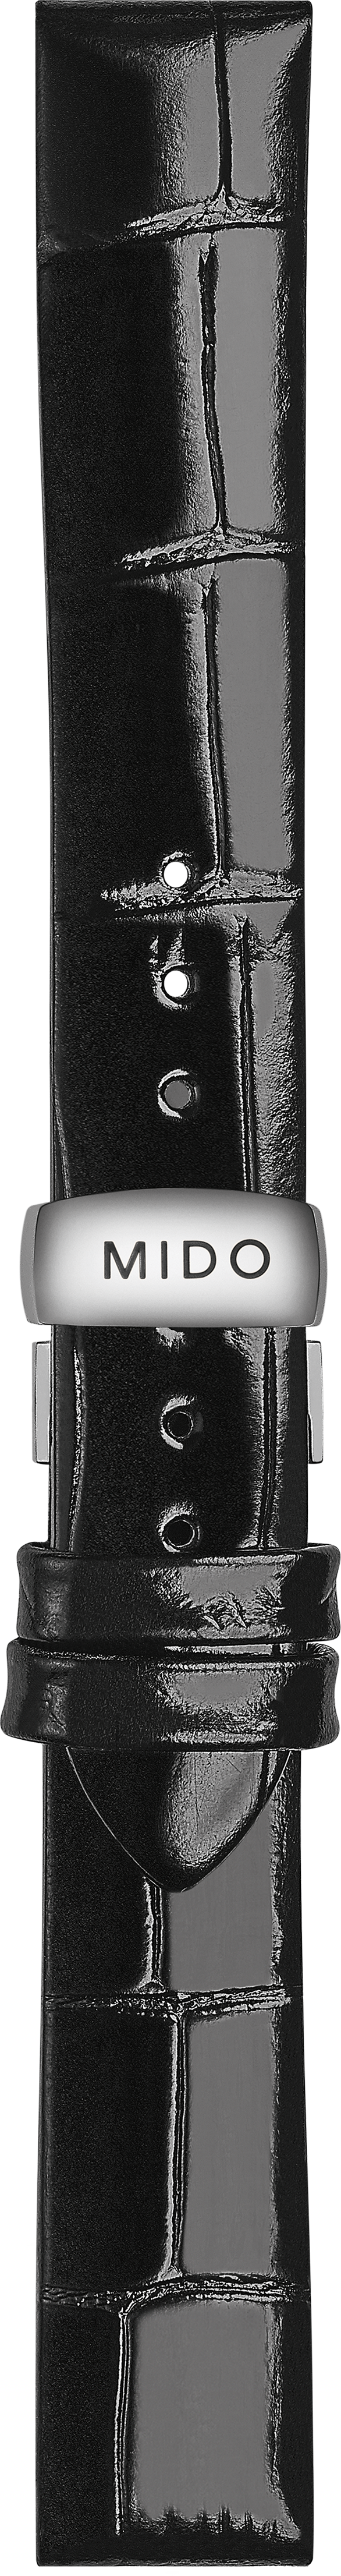 Mido Rainflower schwarzes Rindsleder-Armband